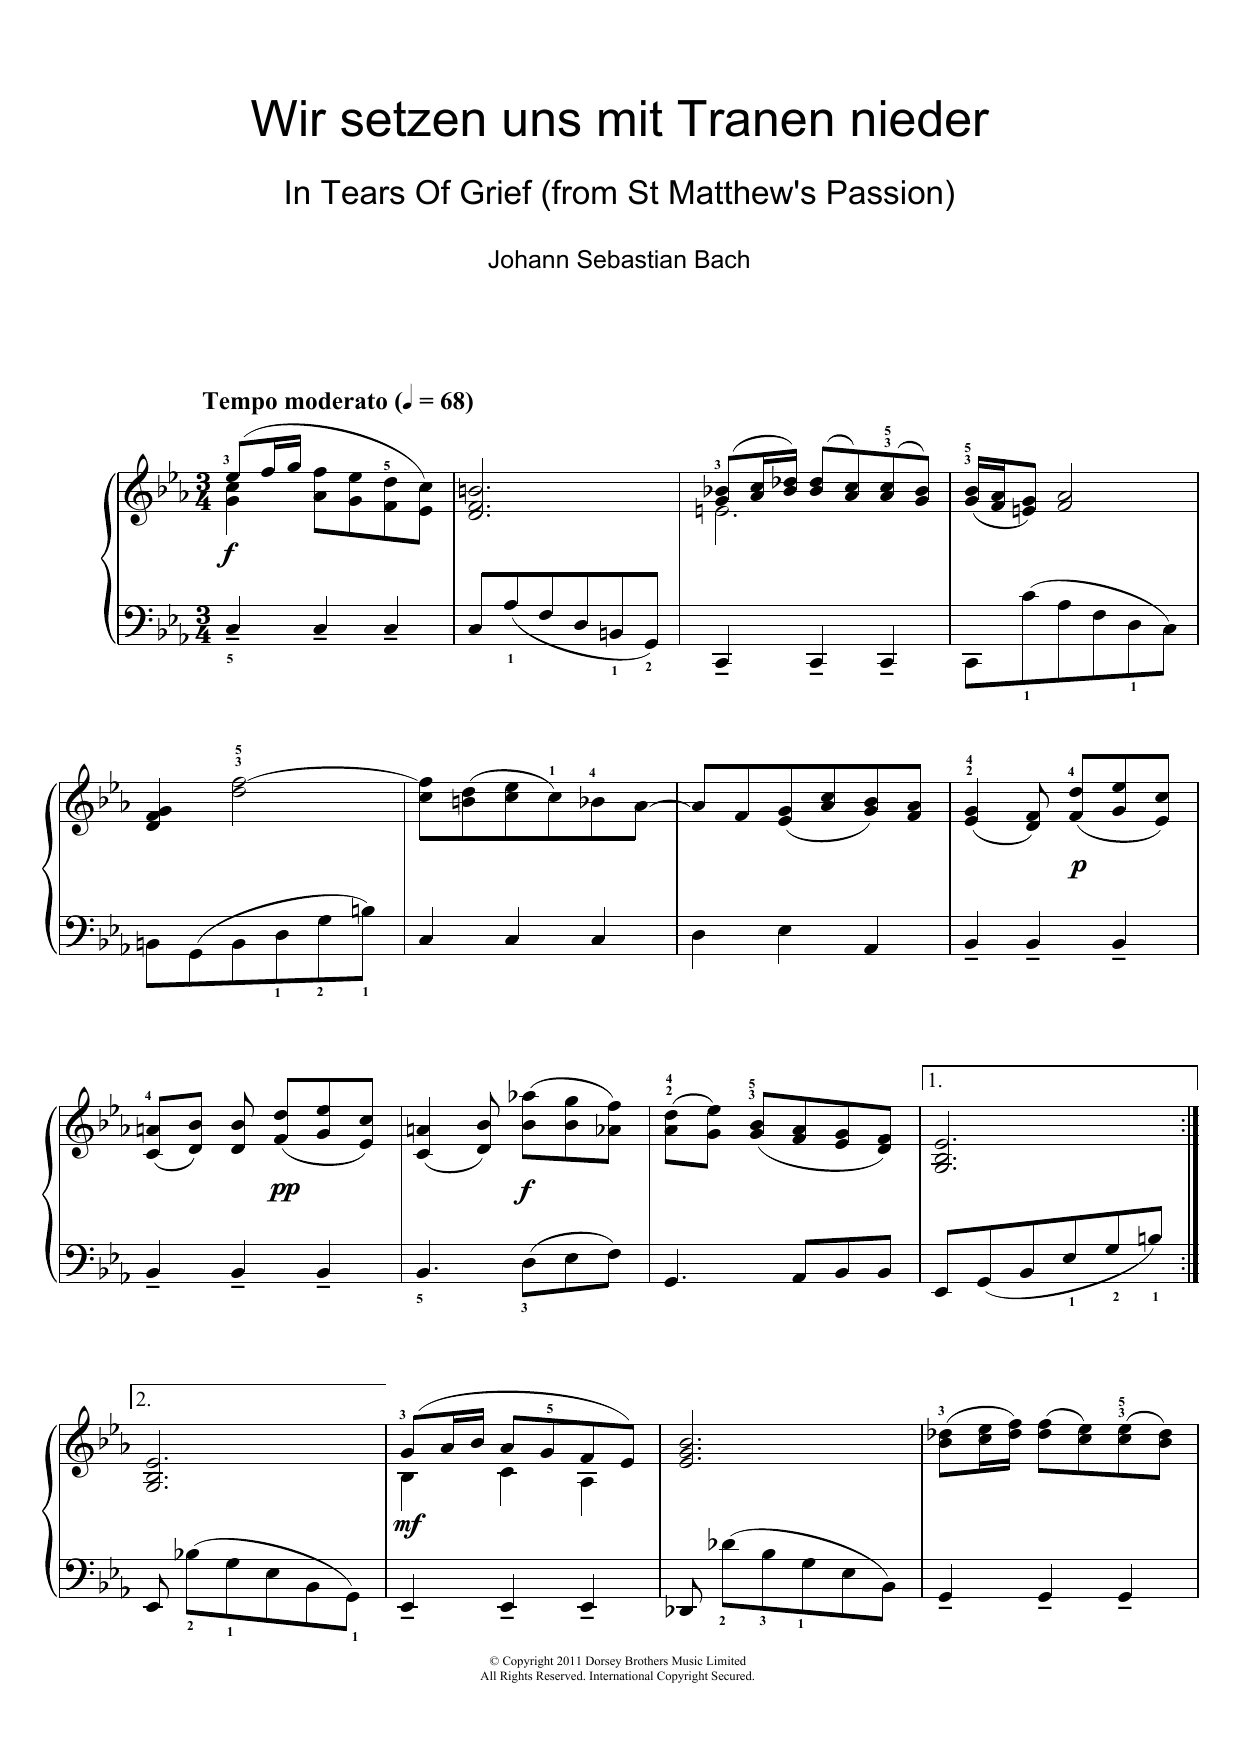 Johann Sebastian Bach Wir setzen uns mit Tranen nieder sheet music notes and chords arranged for Piano Solo